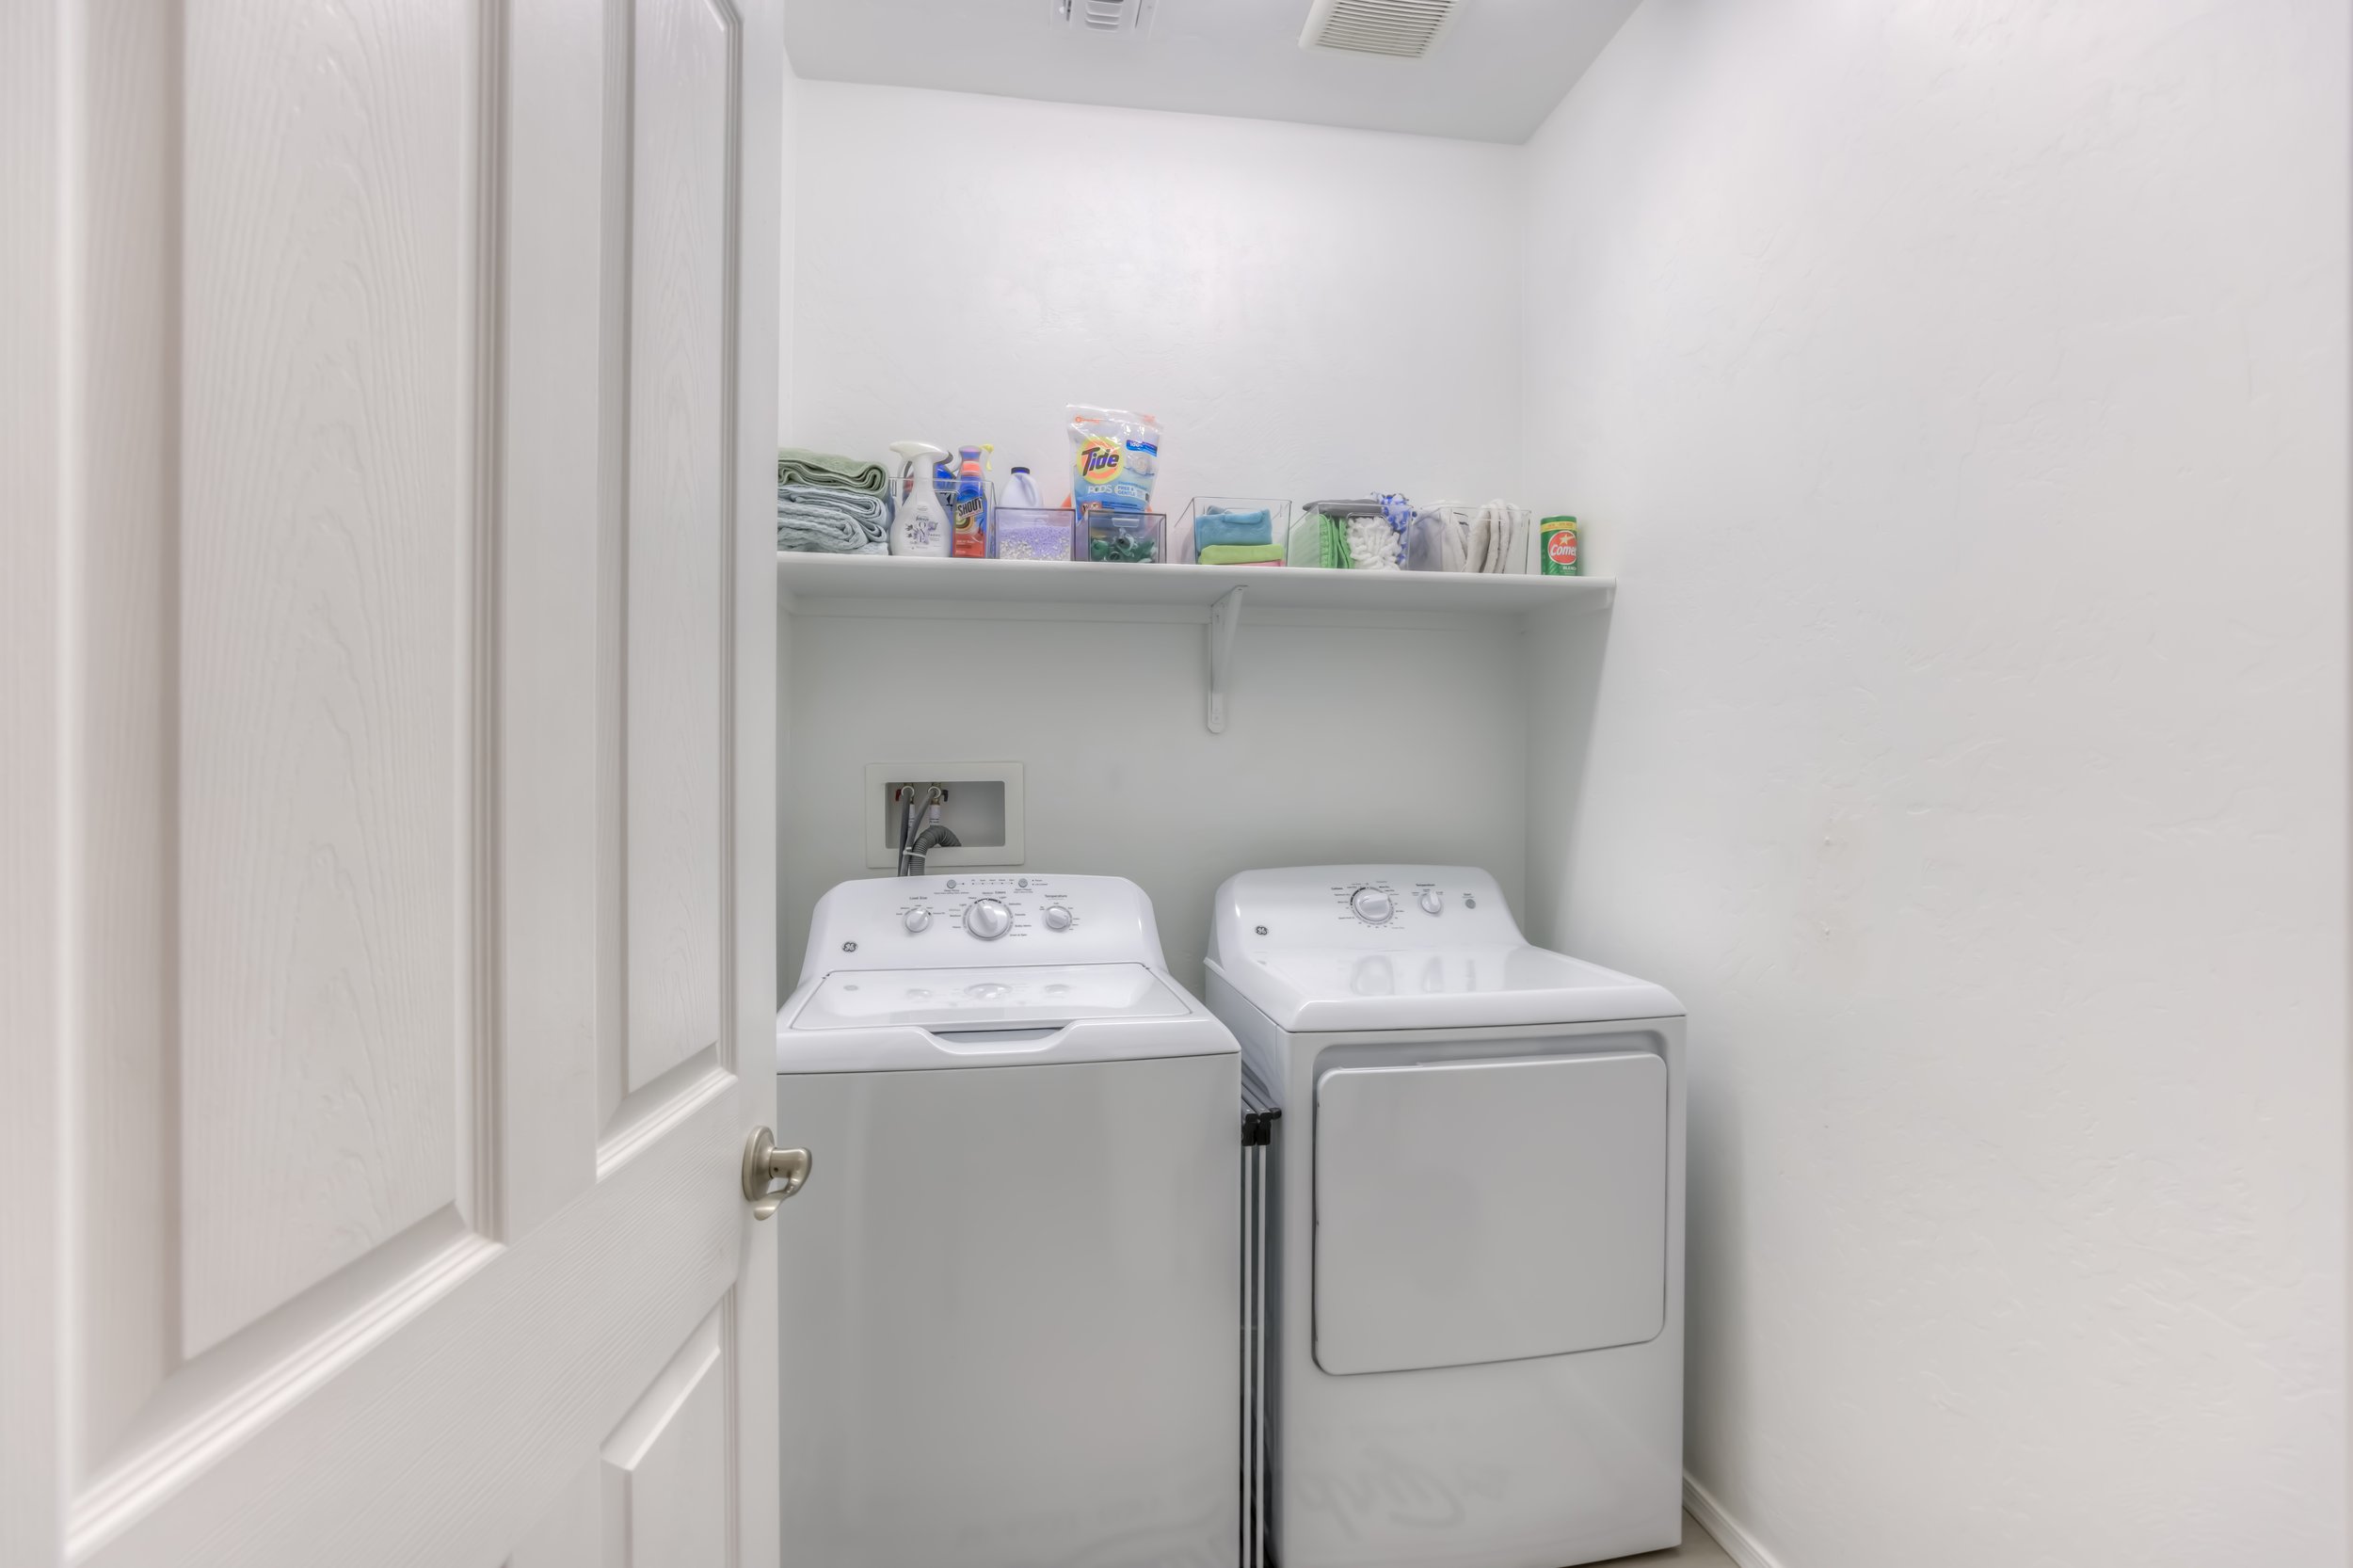 13 Laundry Room.jpg